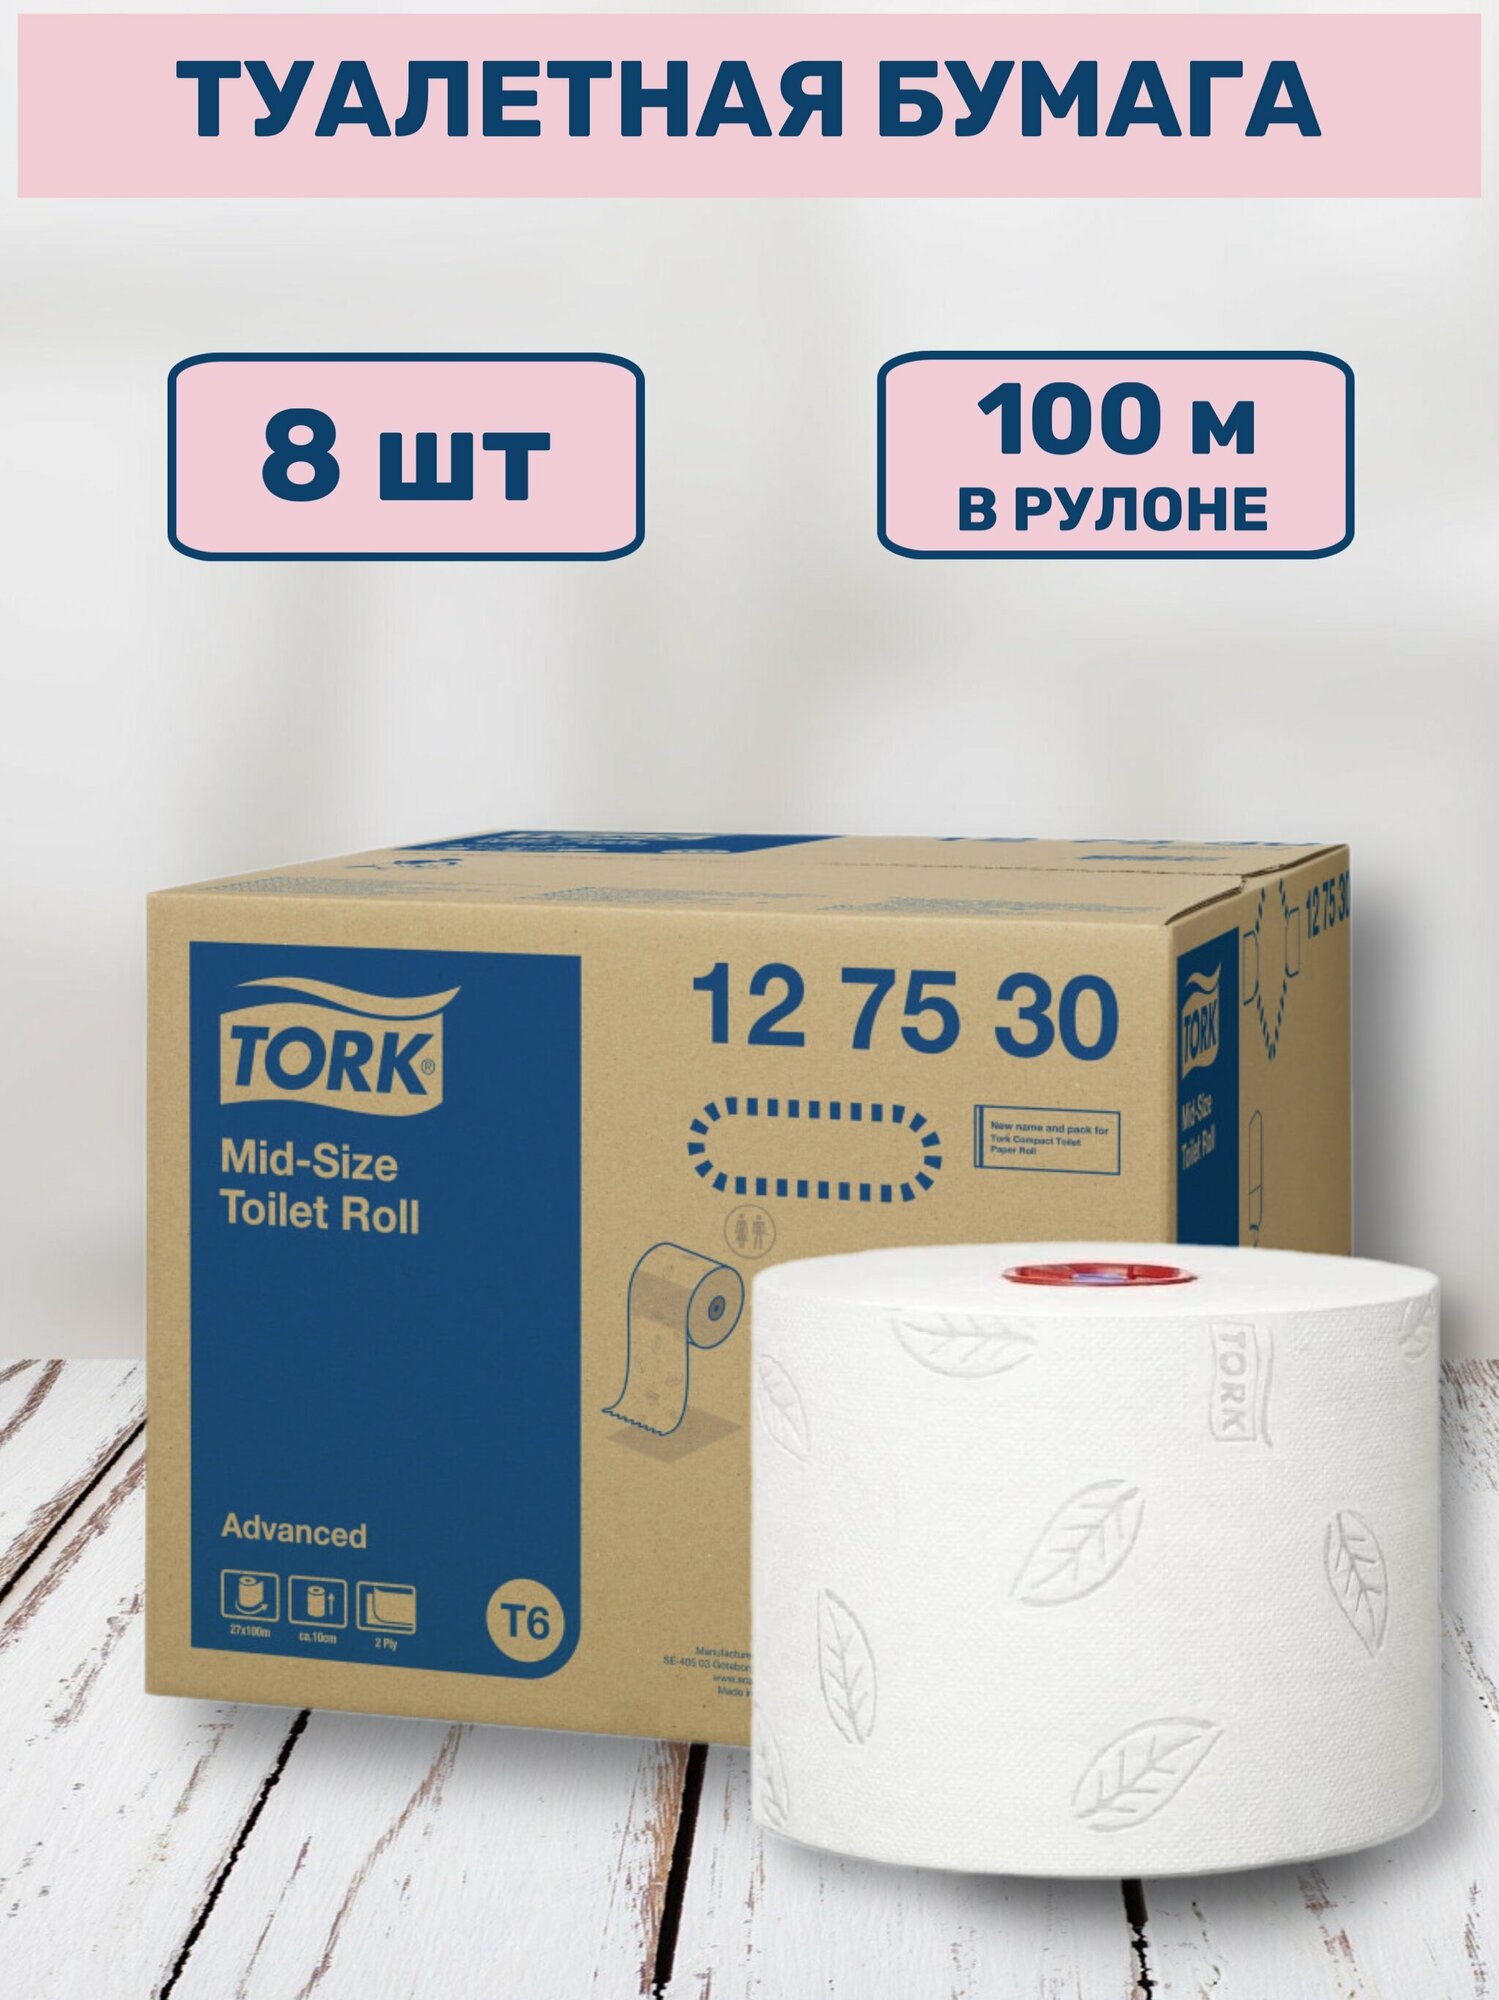 Бумага туалетная 100 м, TORK (Система Т6), комплект 8 шт., Advanced, 2-слойная, белая, 127530